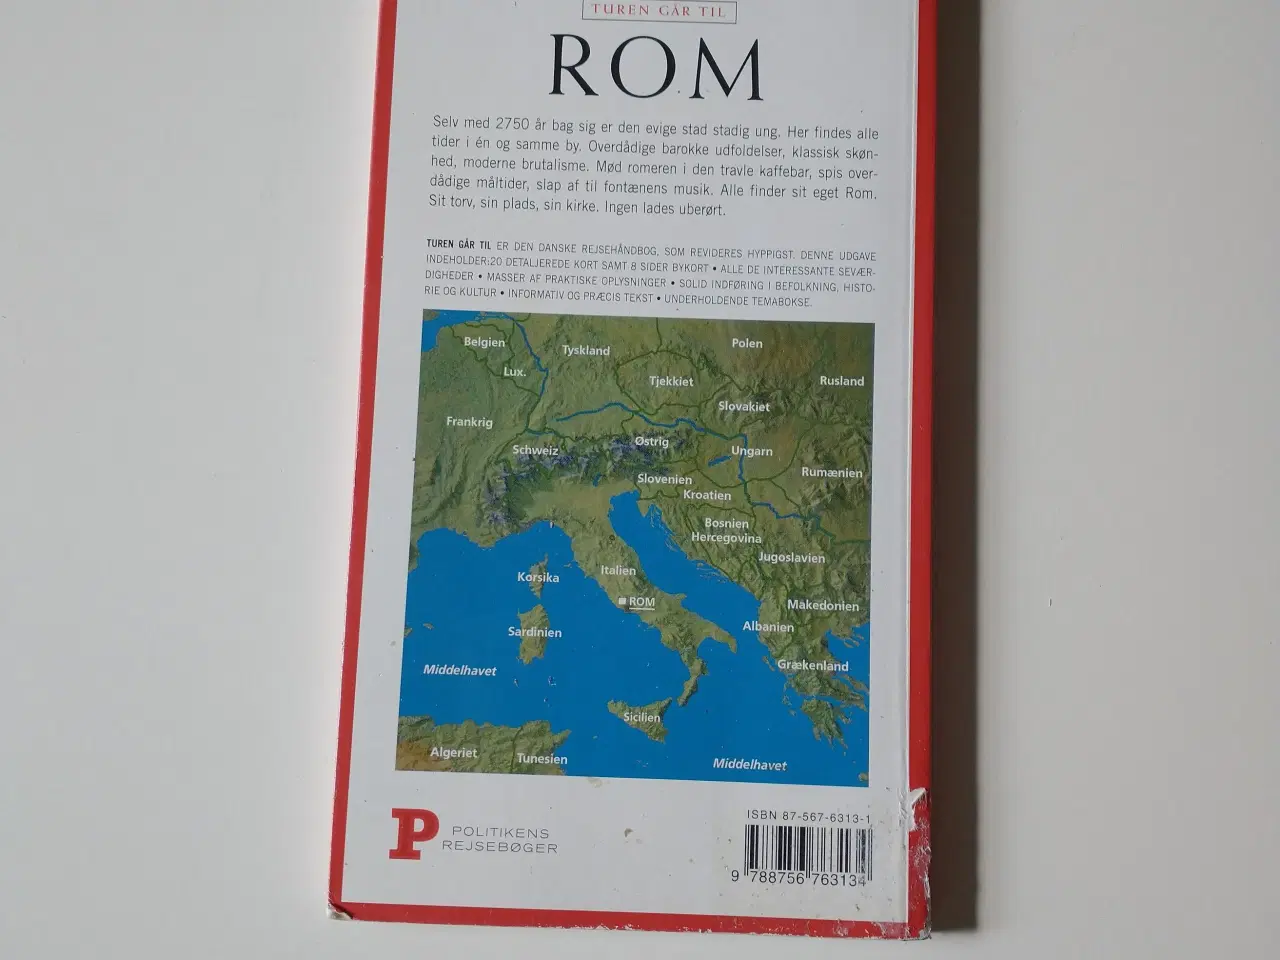 Billede 2 - Turen går til Rom